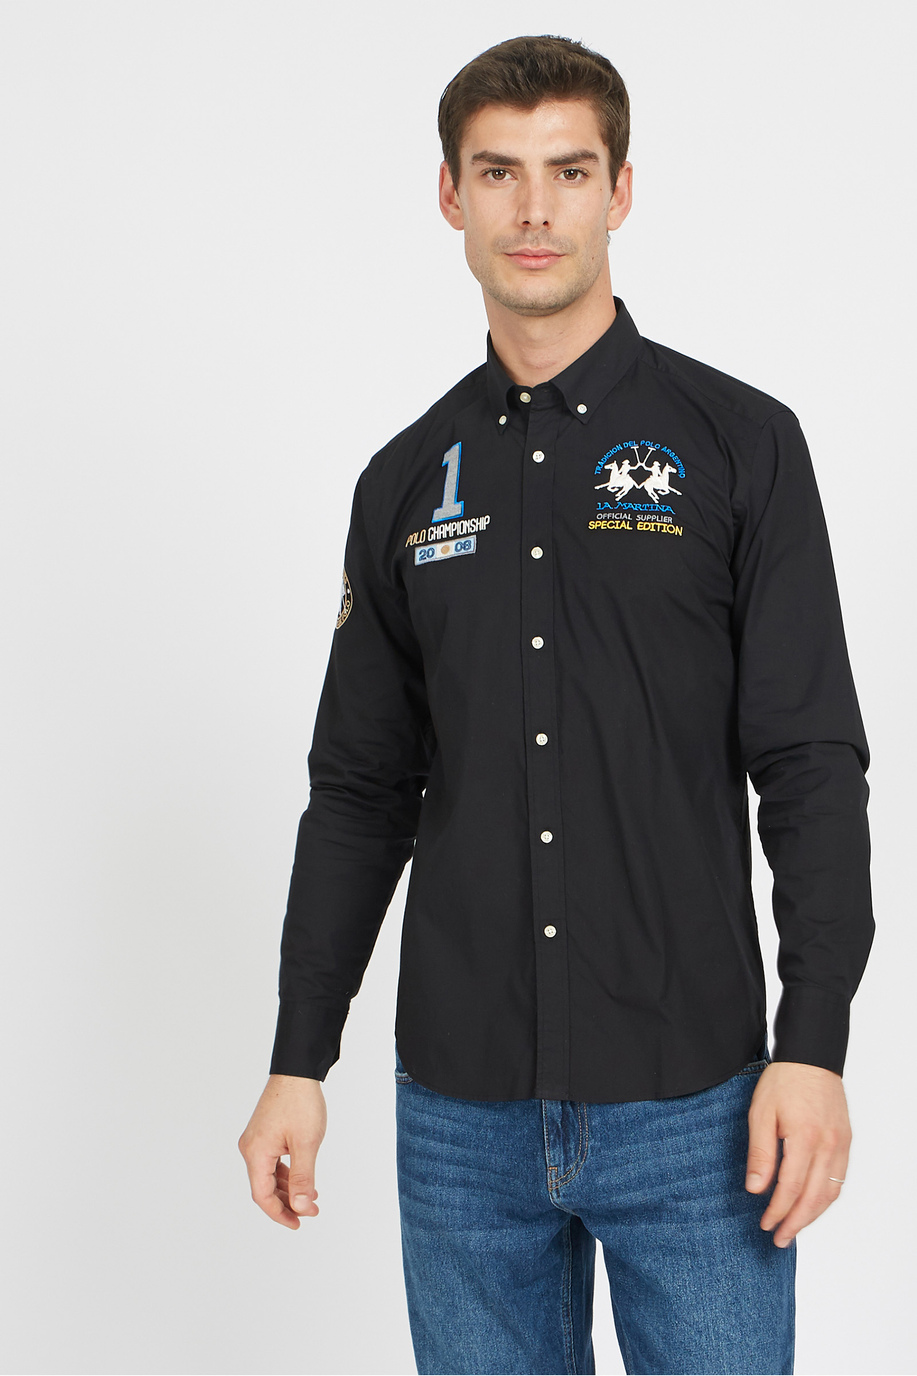 Men's long-sleeved shirt in regular fit stretch cotton - Vijun - Inmortales | La Martina - Official Online Shop